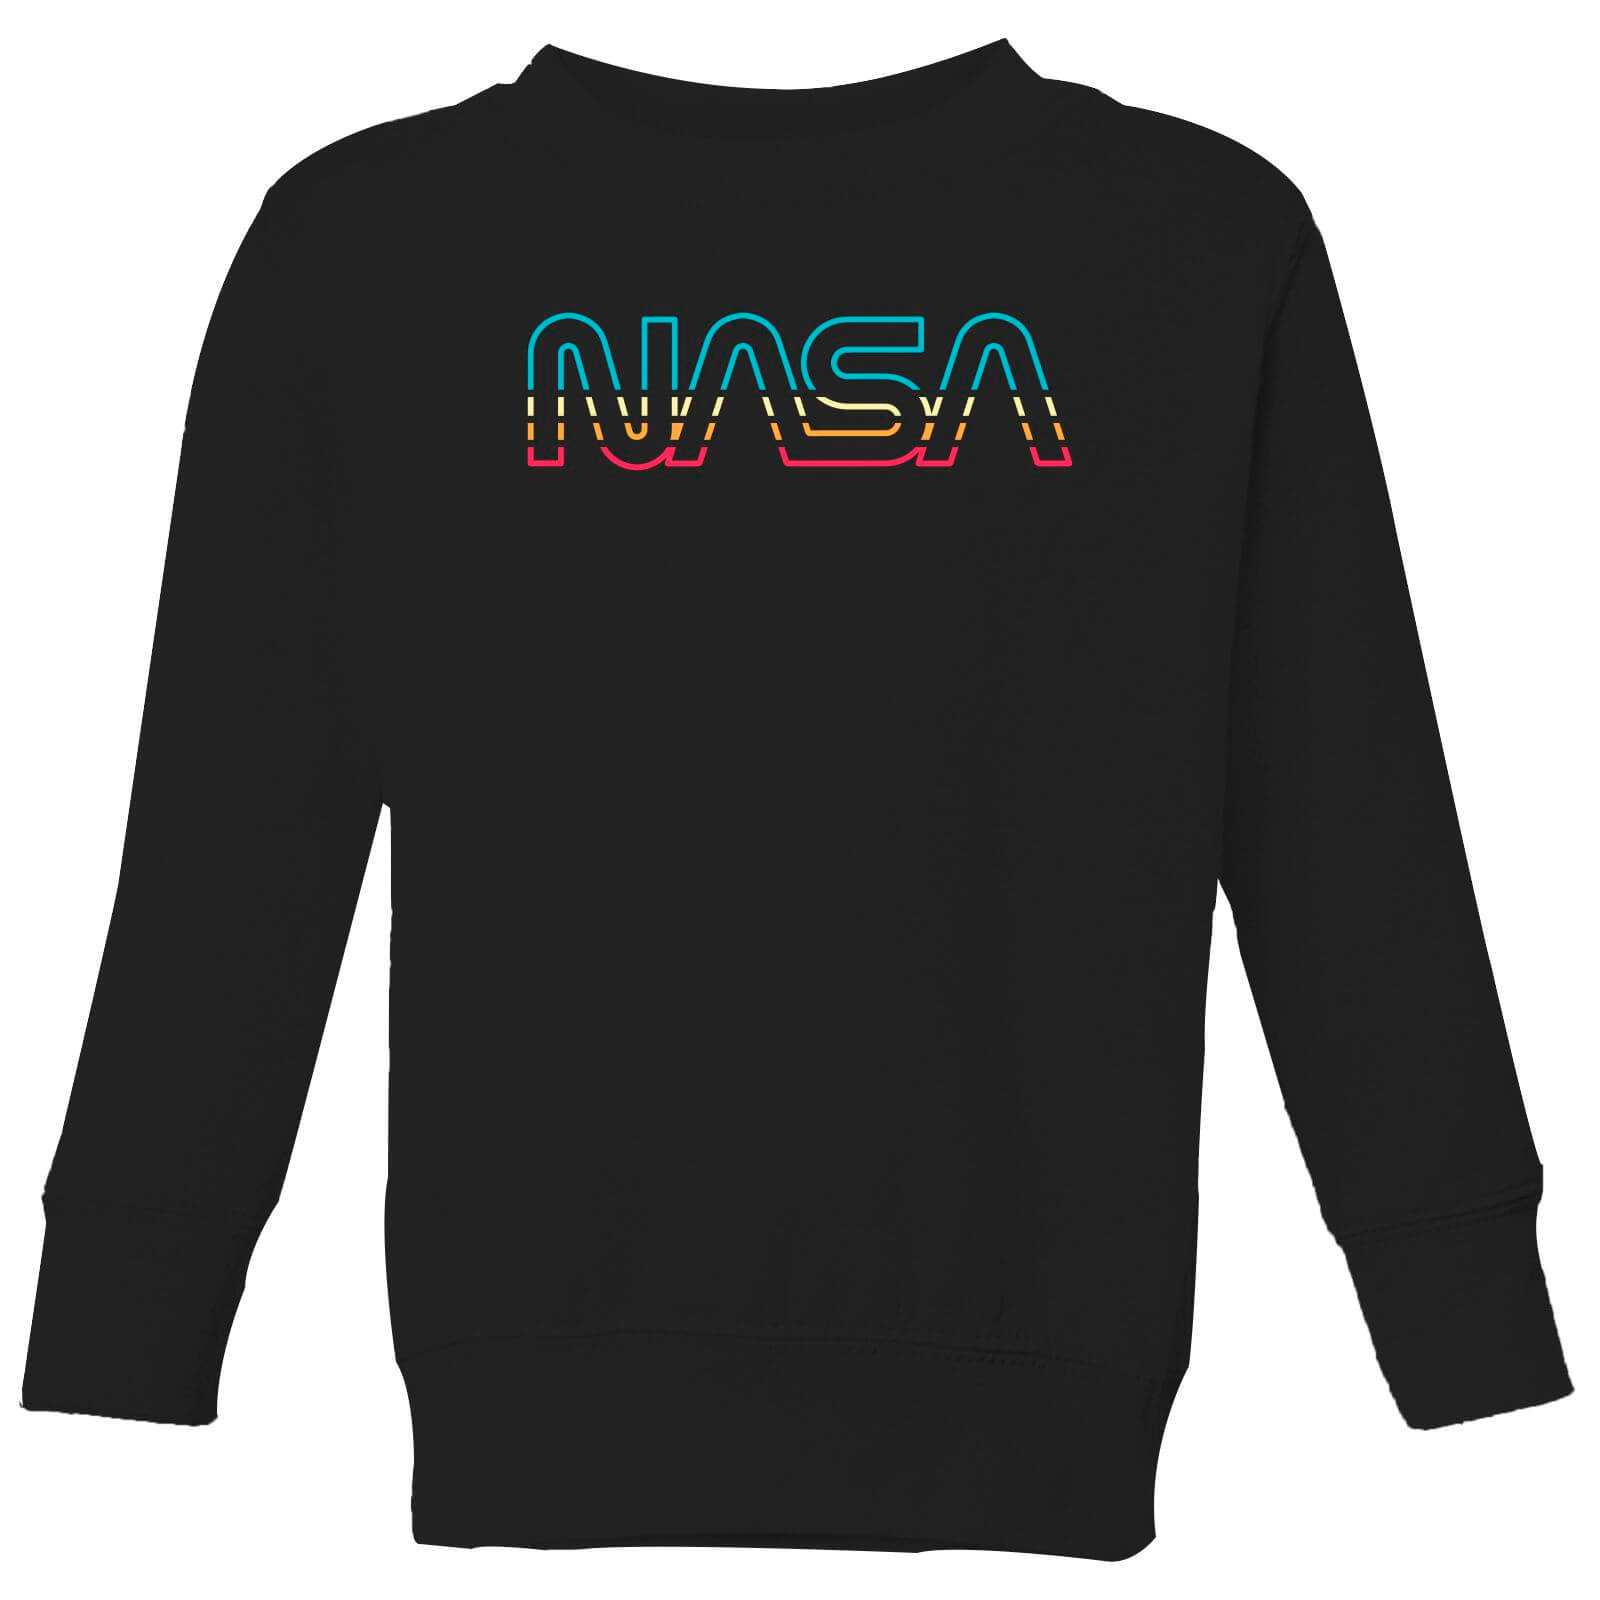 NASA Spectrum Kids' Sweatshirt - Black - 3-4 Years - Black